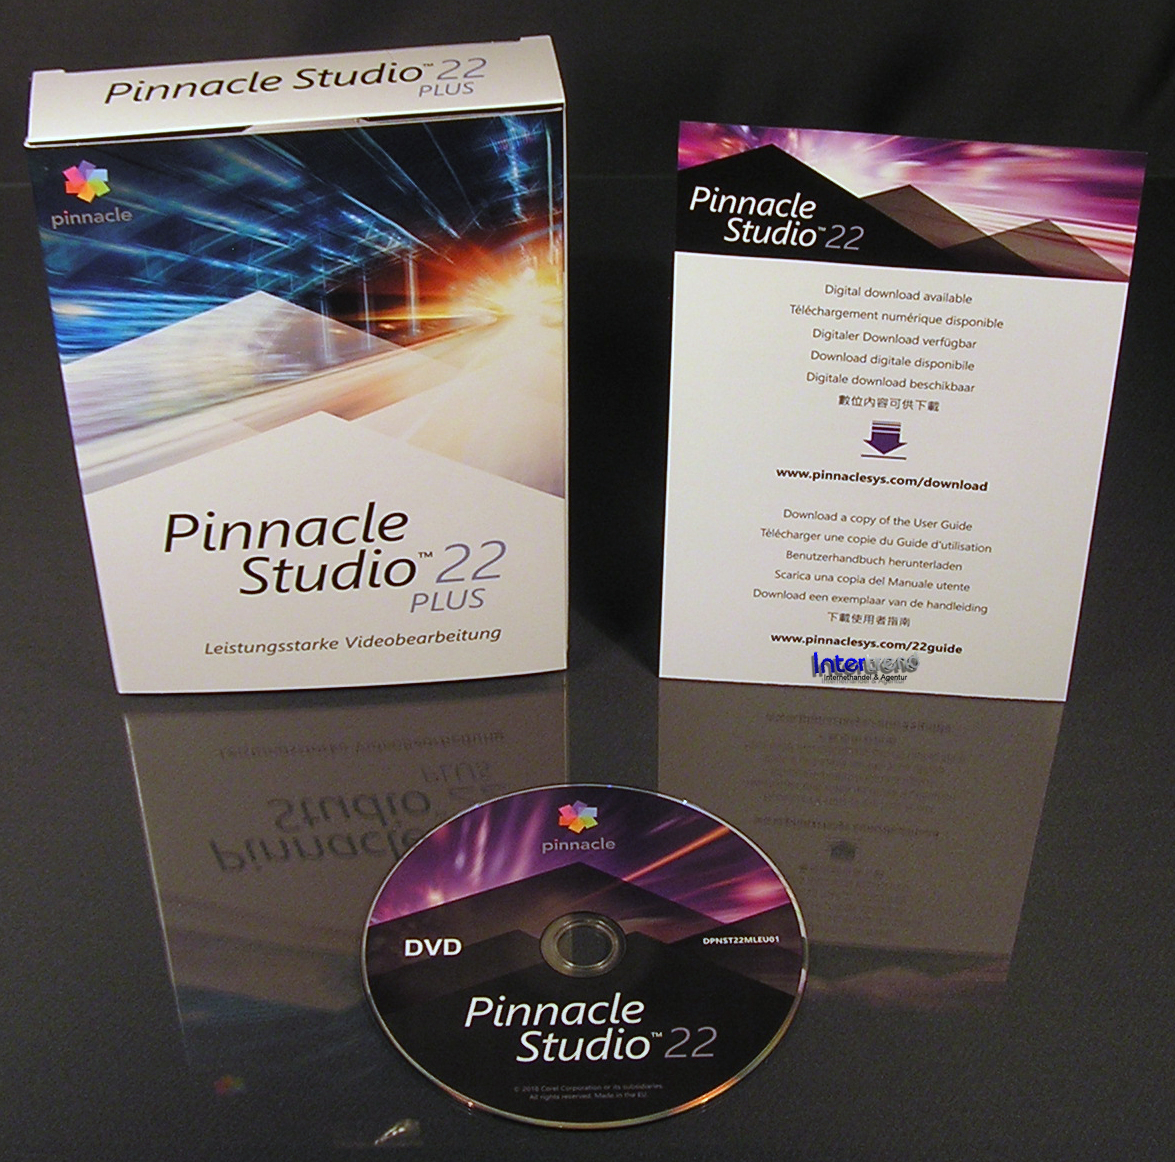 pinnacle studio 21 ultimate download kostenlos vollversion